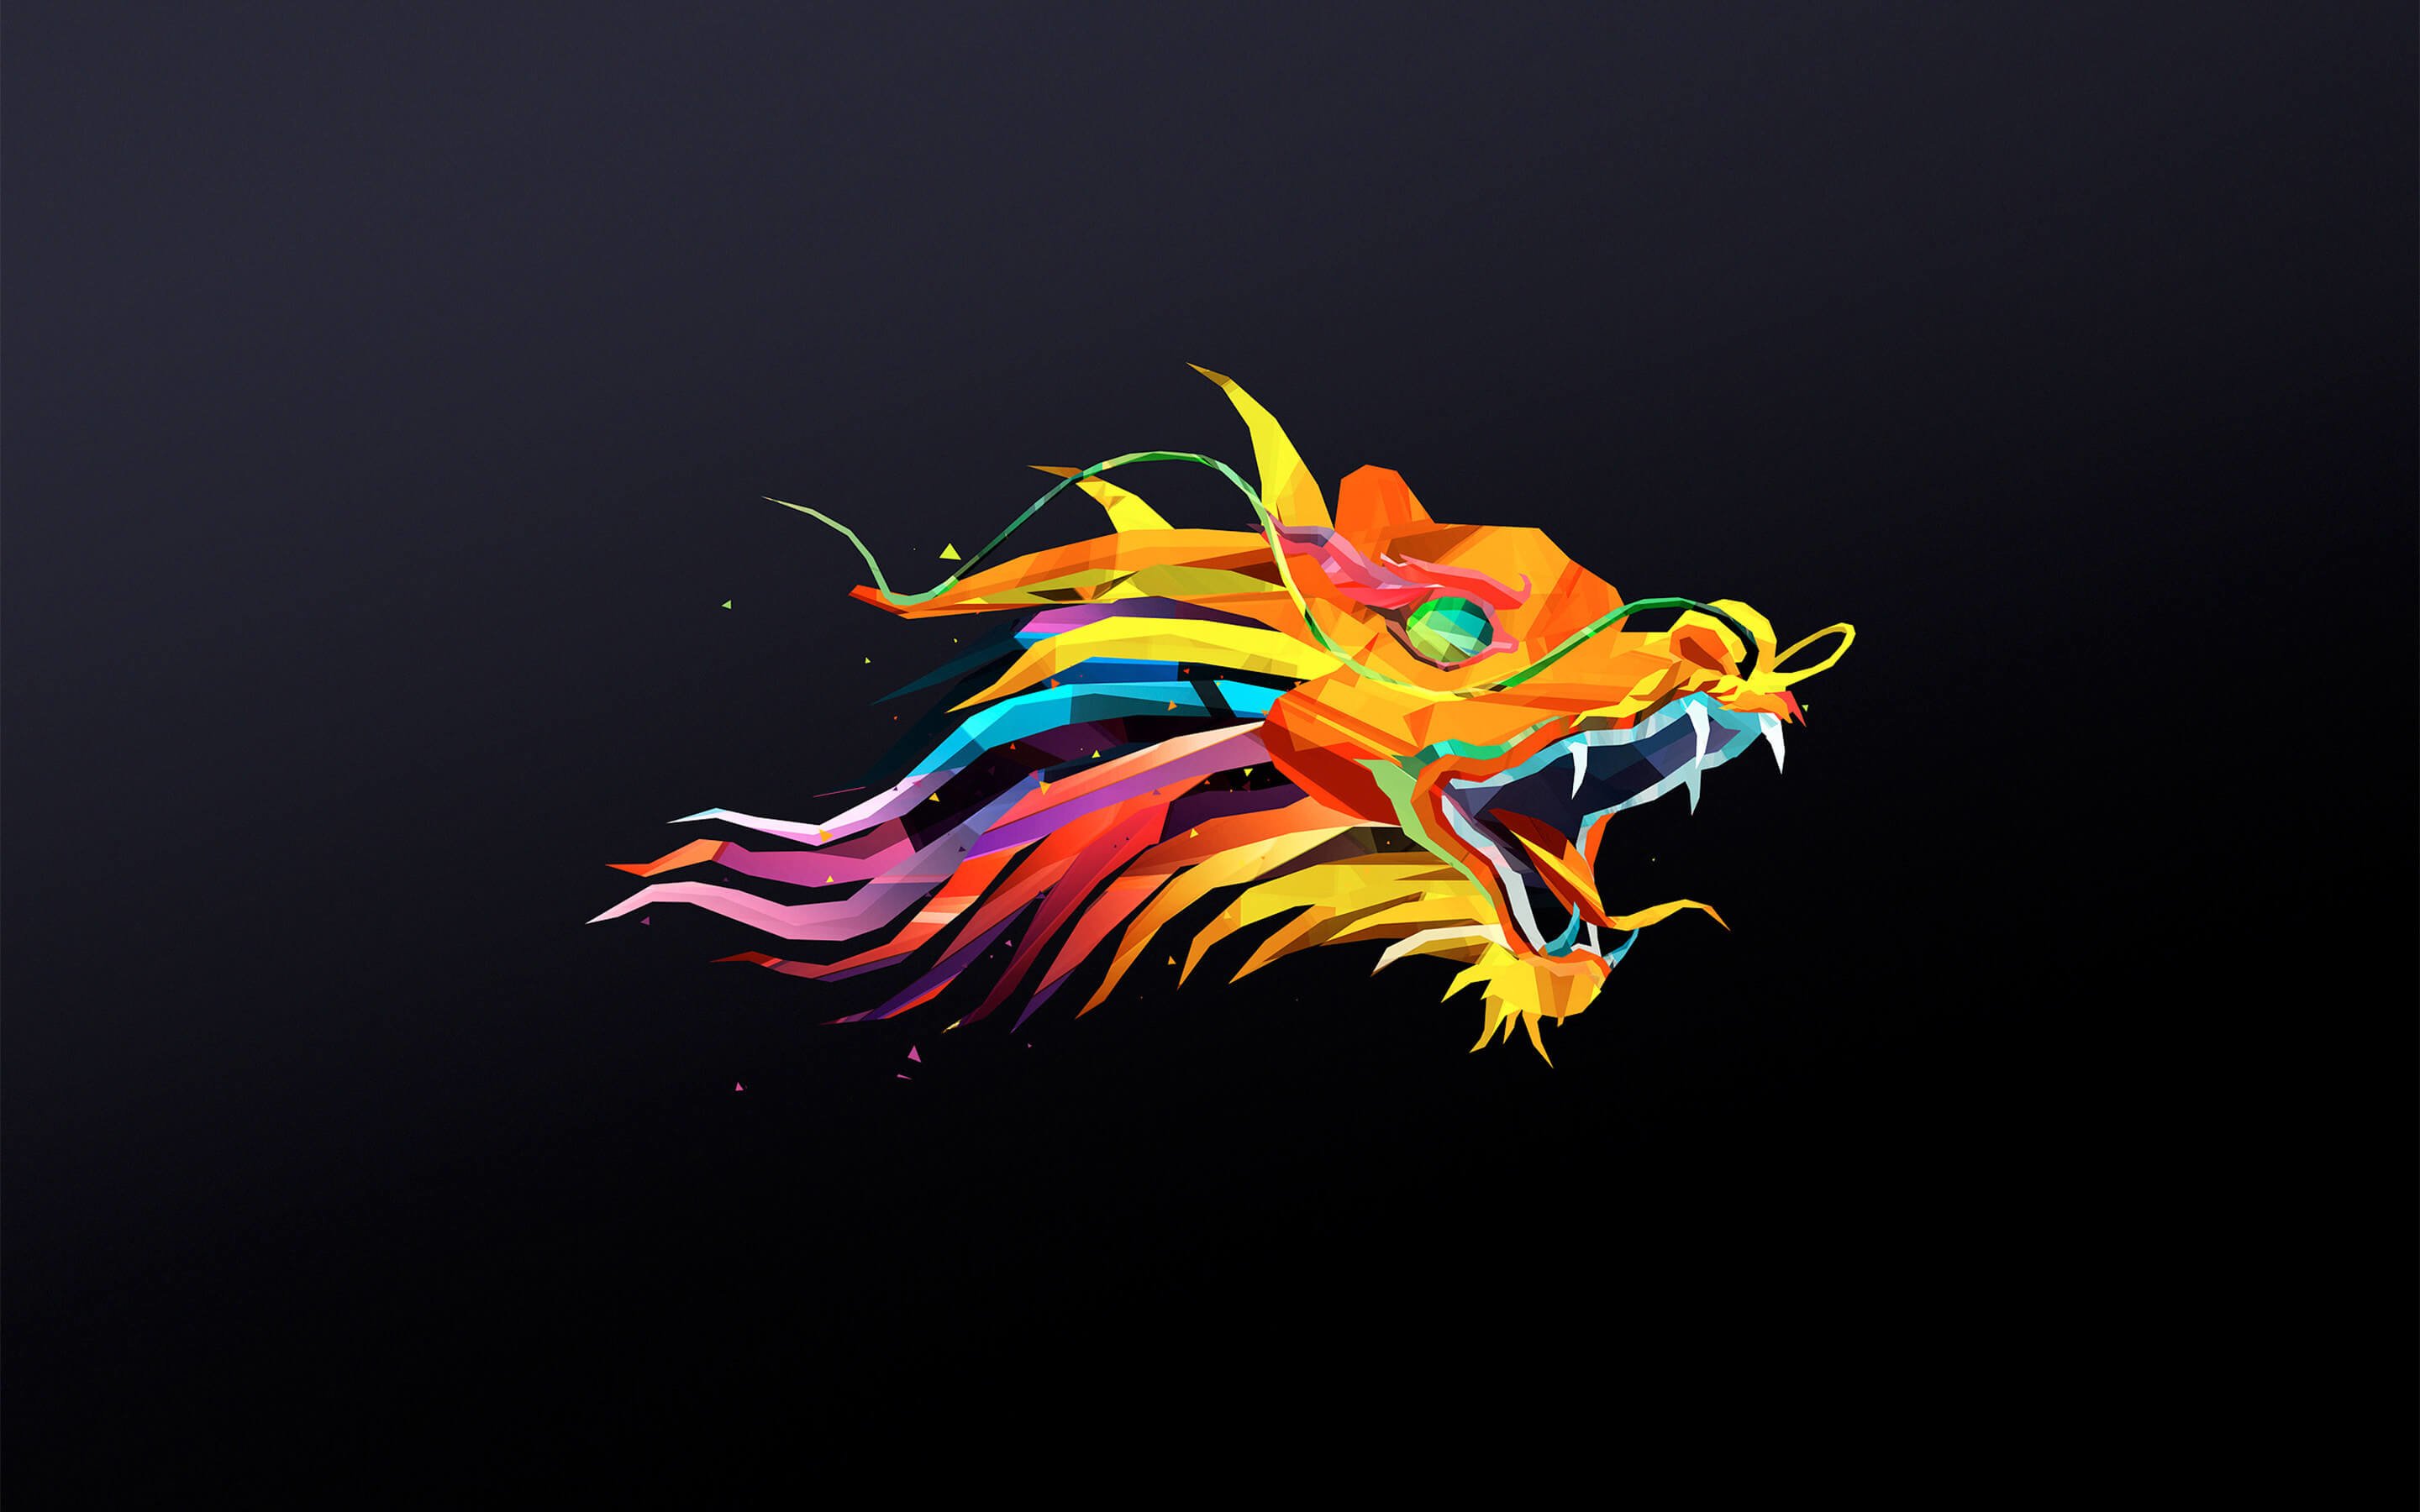 The Dragon Wallpaper for Desktop 2880x1800